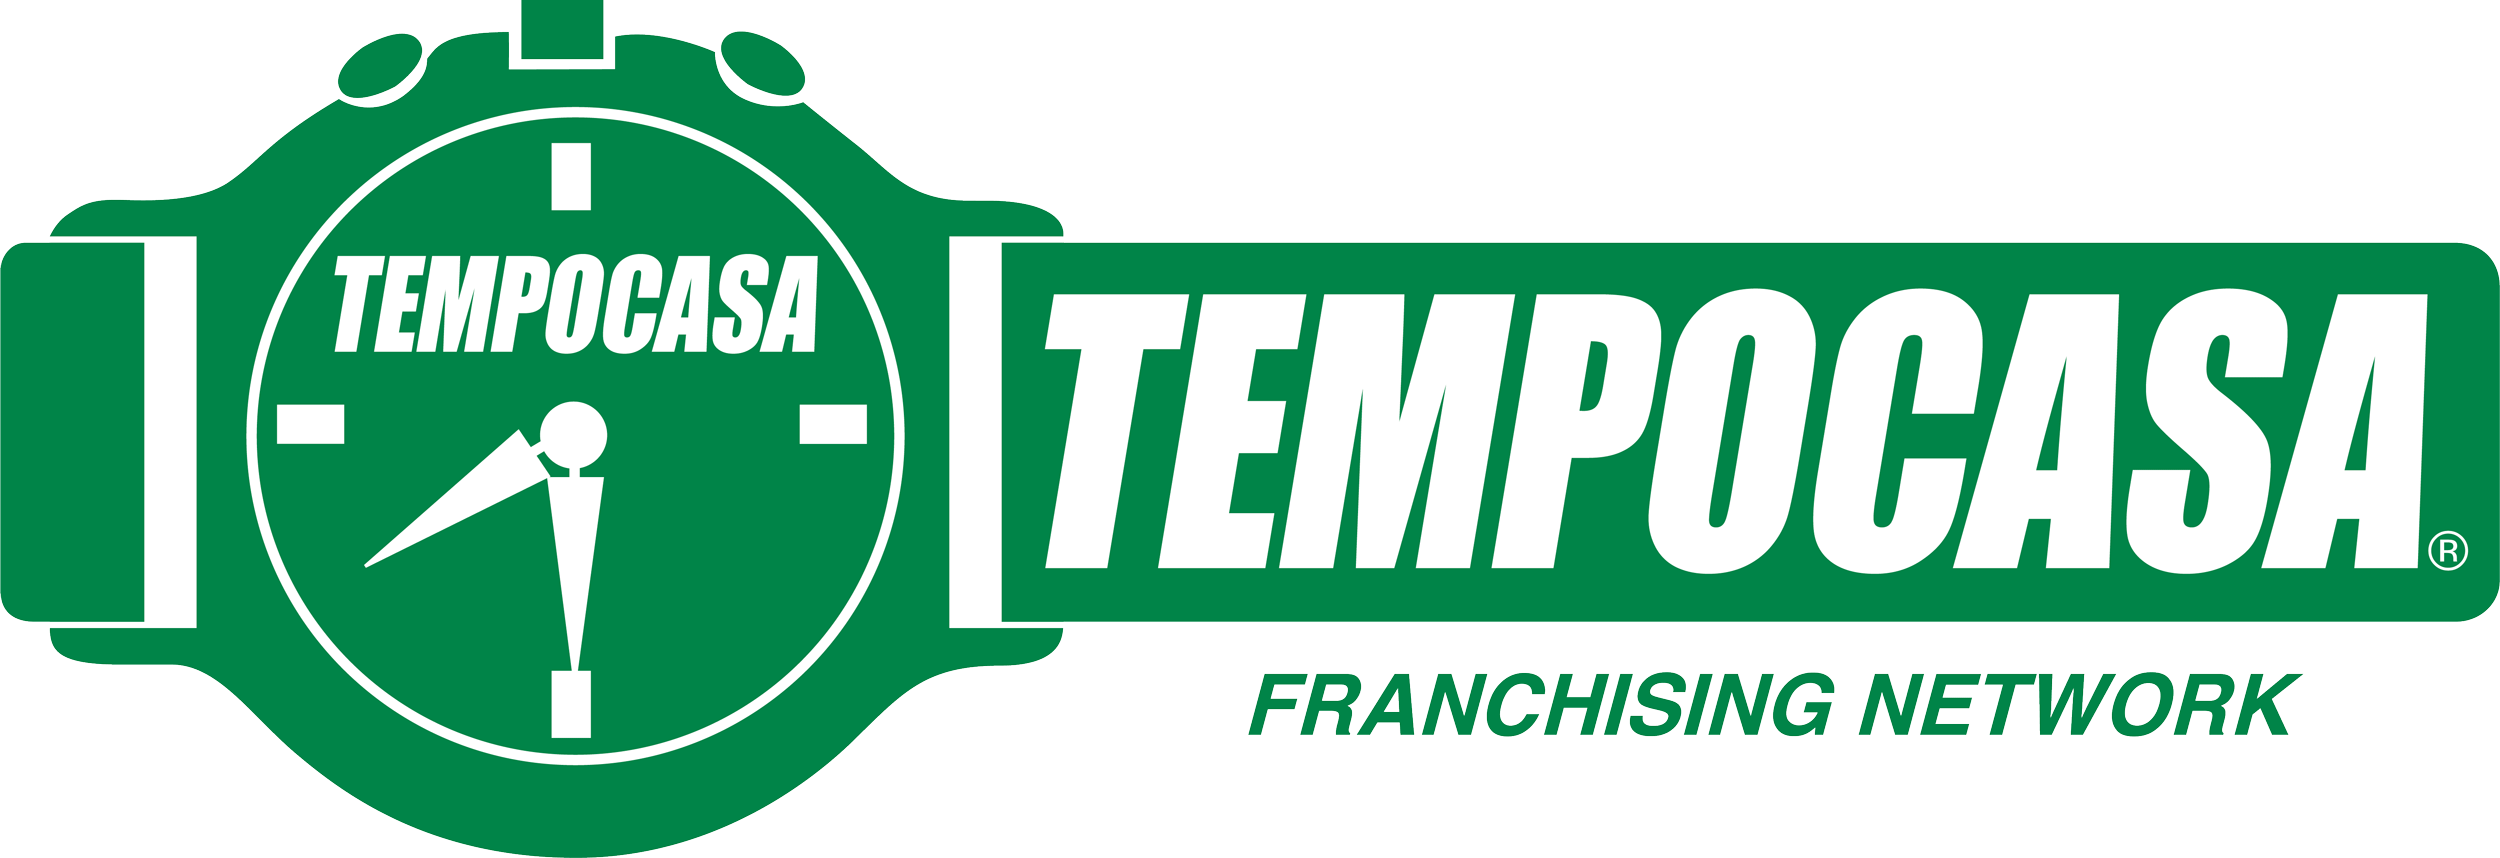 Torino - Rebaudengo - Tempocasa